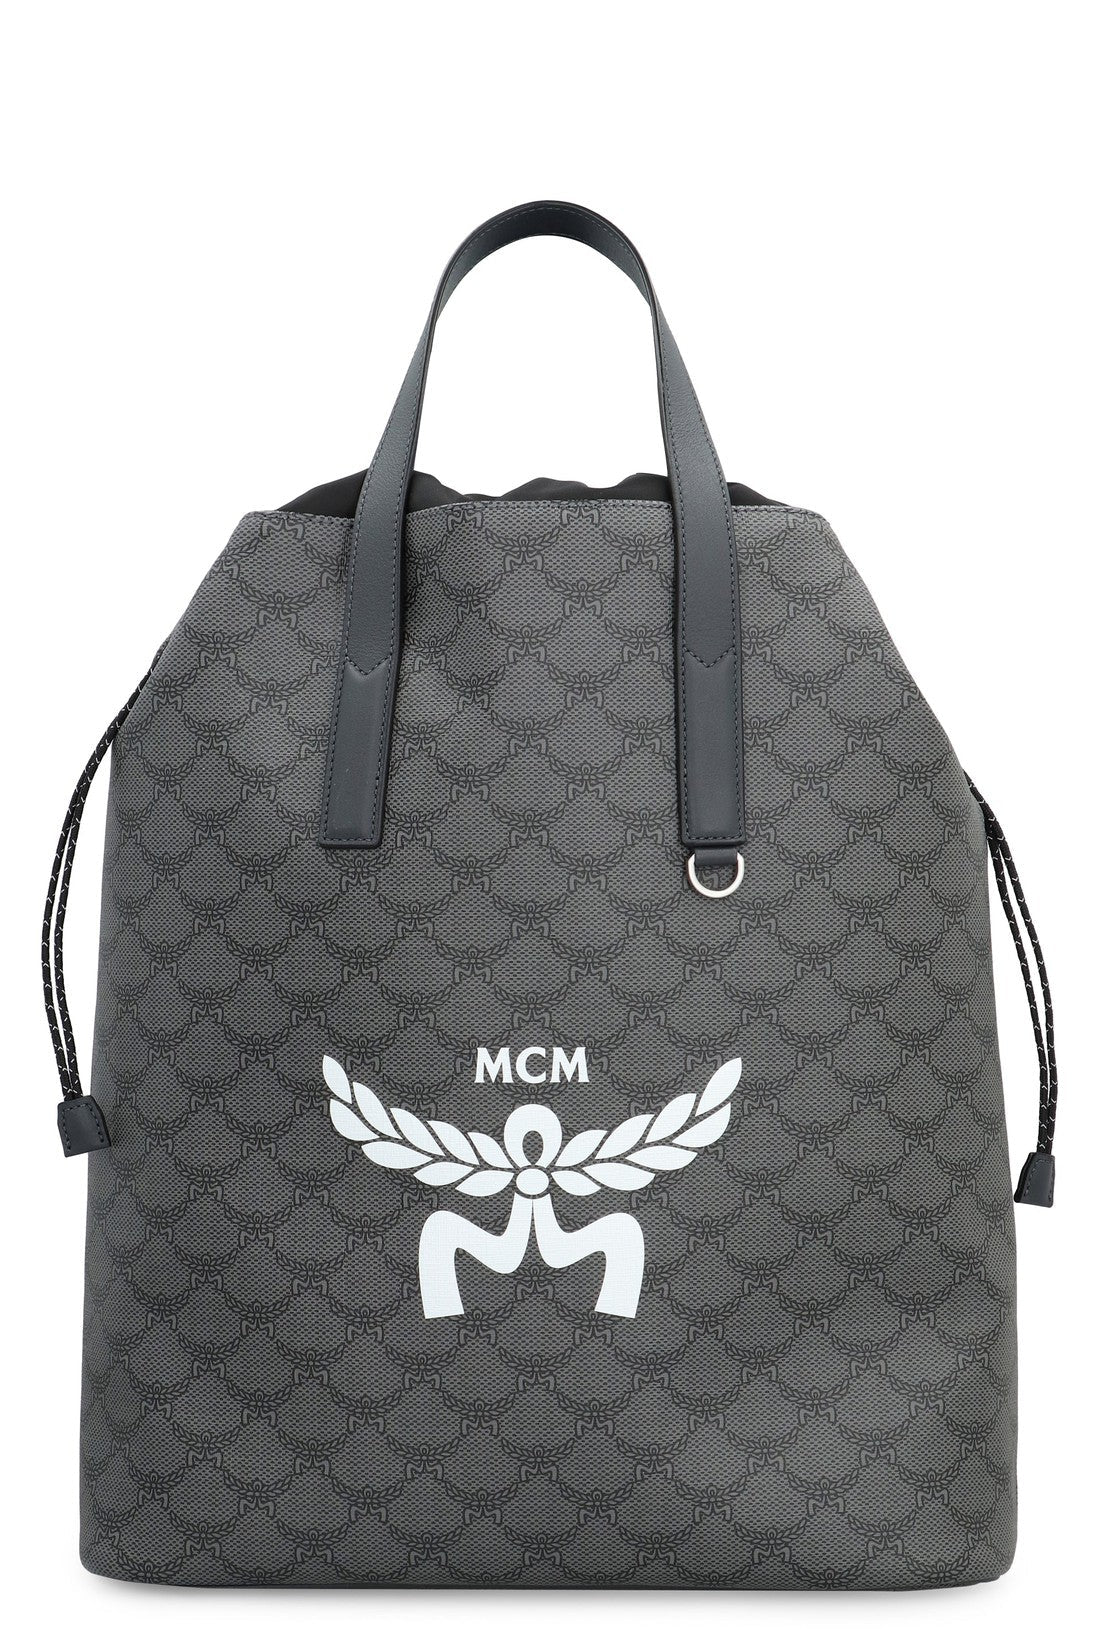 MCM-OUTLET-SALE-Himmel Faux leather backpack-ARCHIVIST